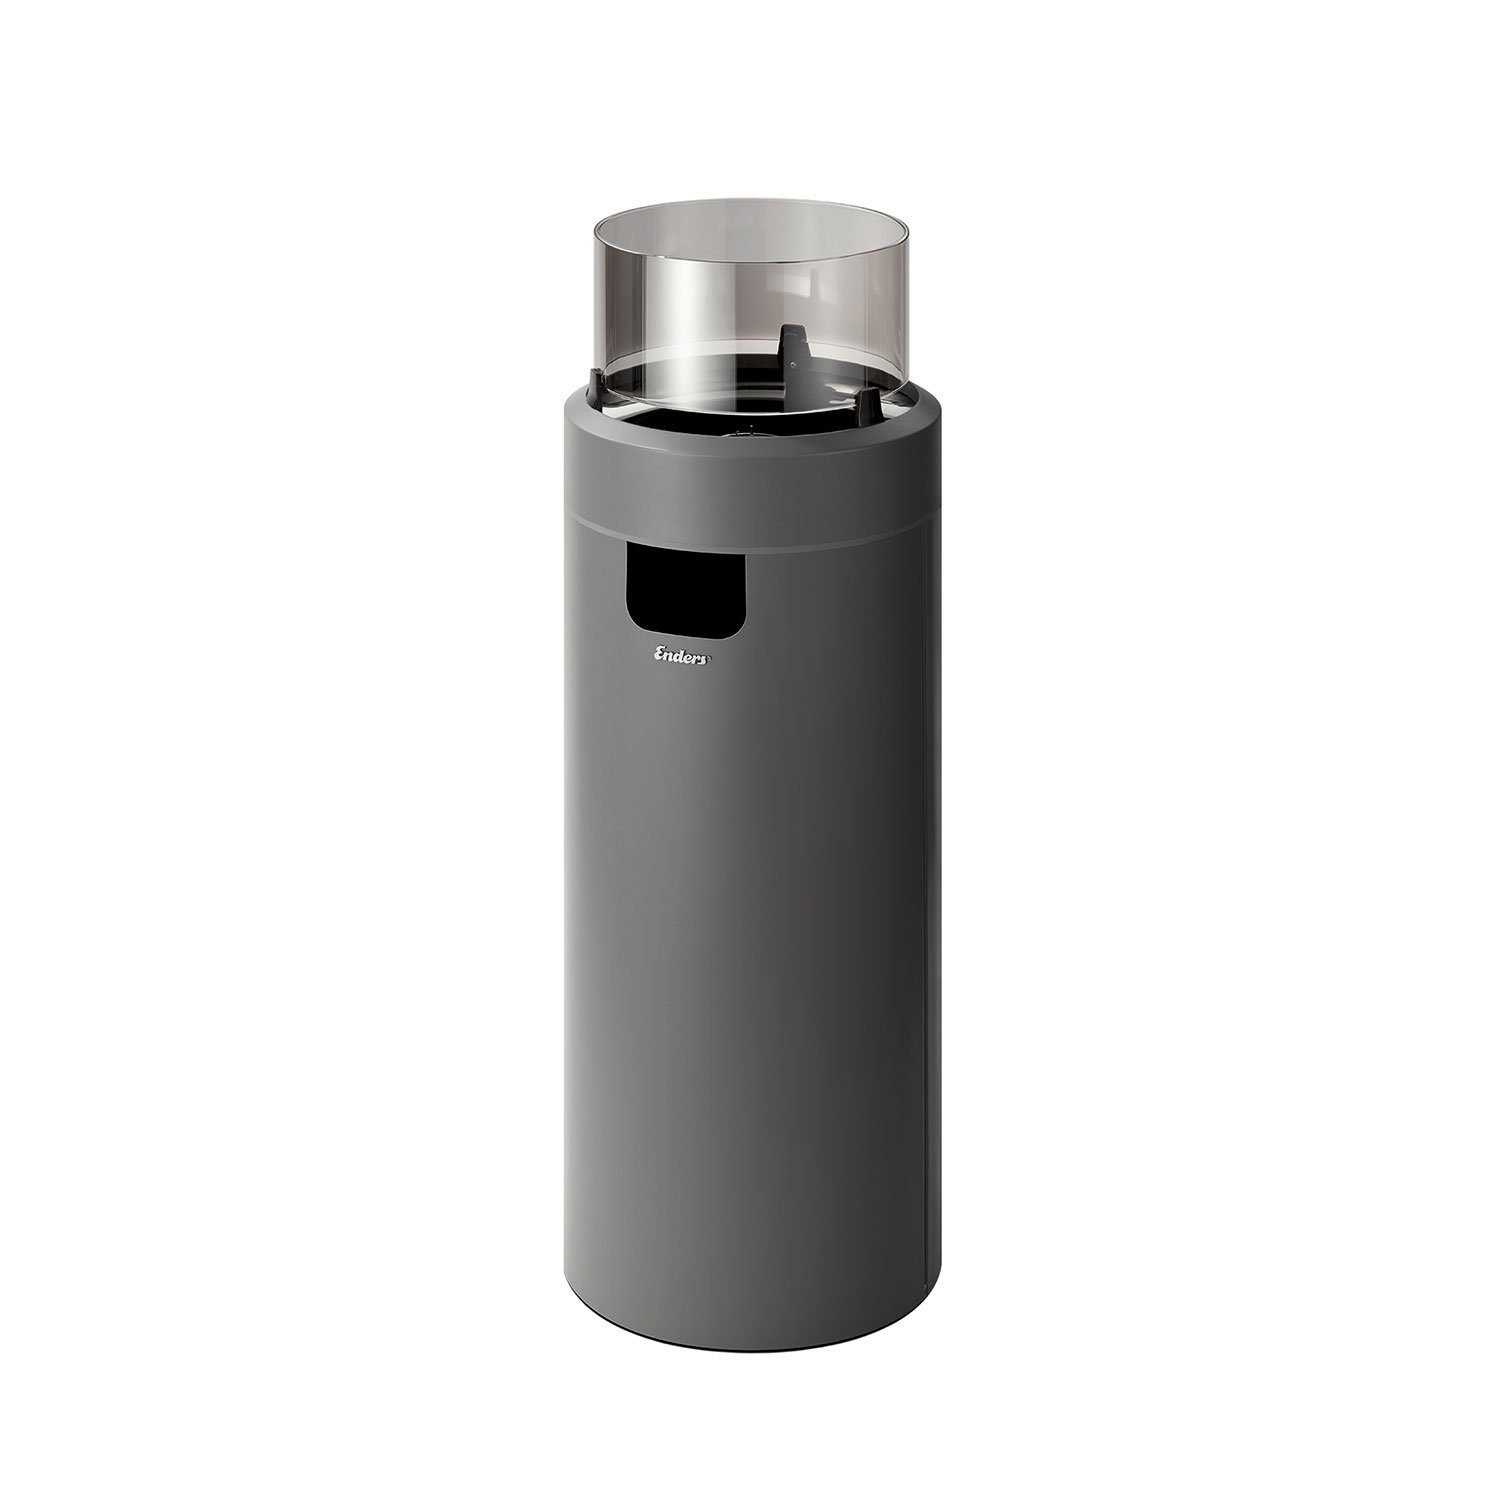 Enders® Heizstrahler Nova LED L Grey/Black, 2500 W, Indirektes Licht um den Boden der edlen Säule grau/ schwarz